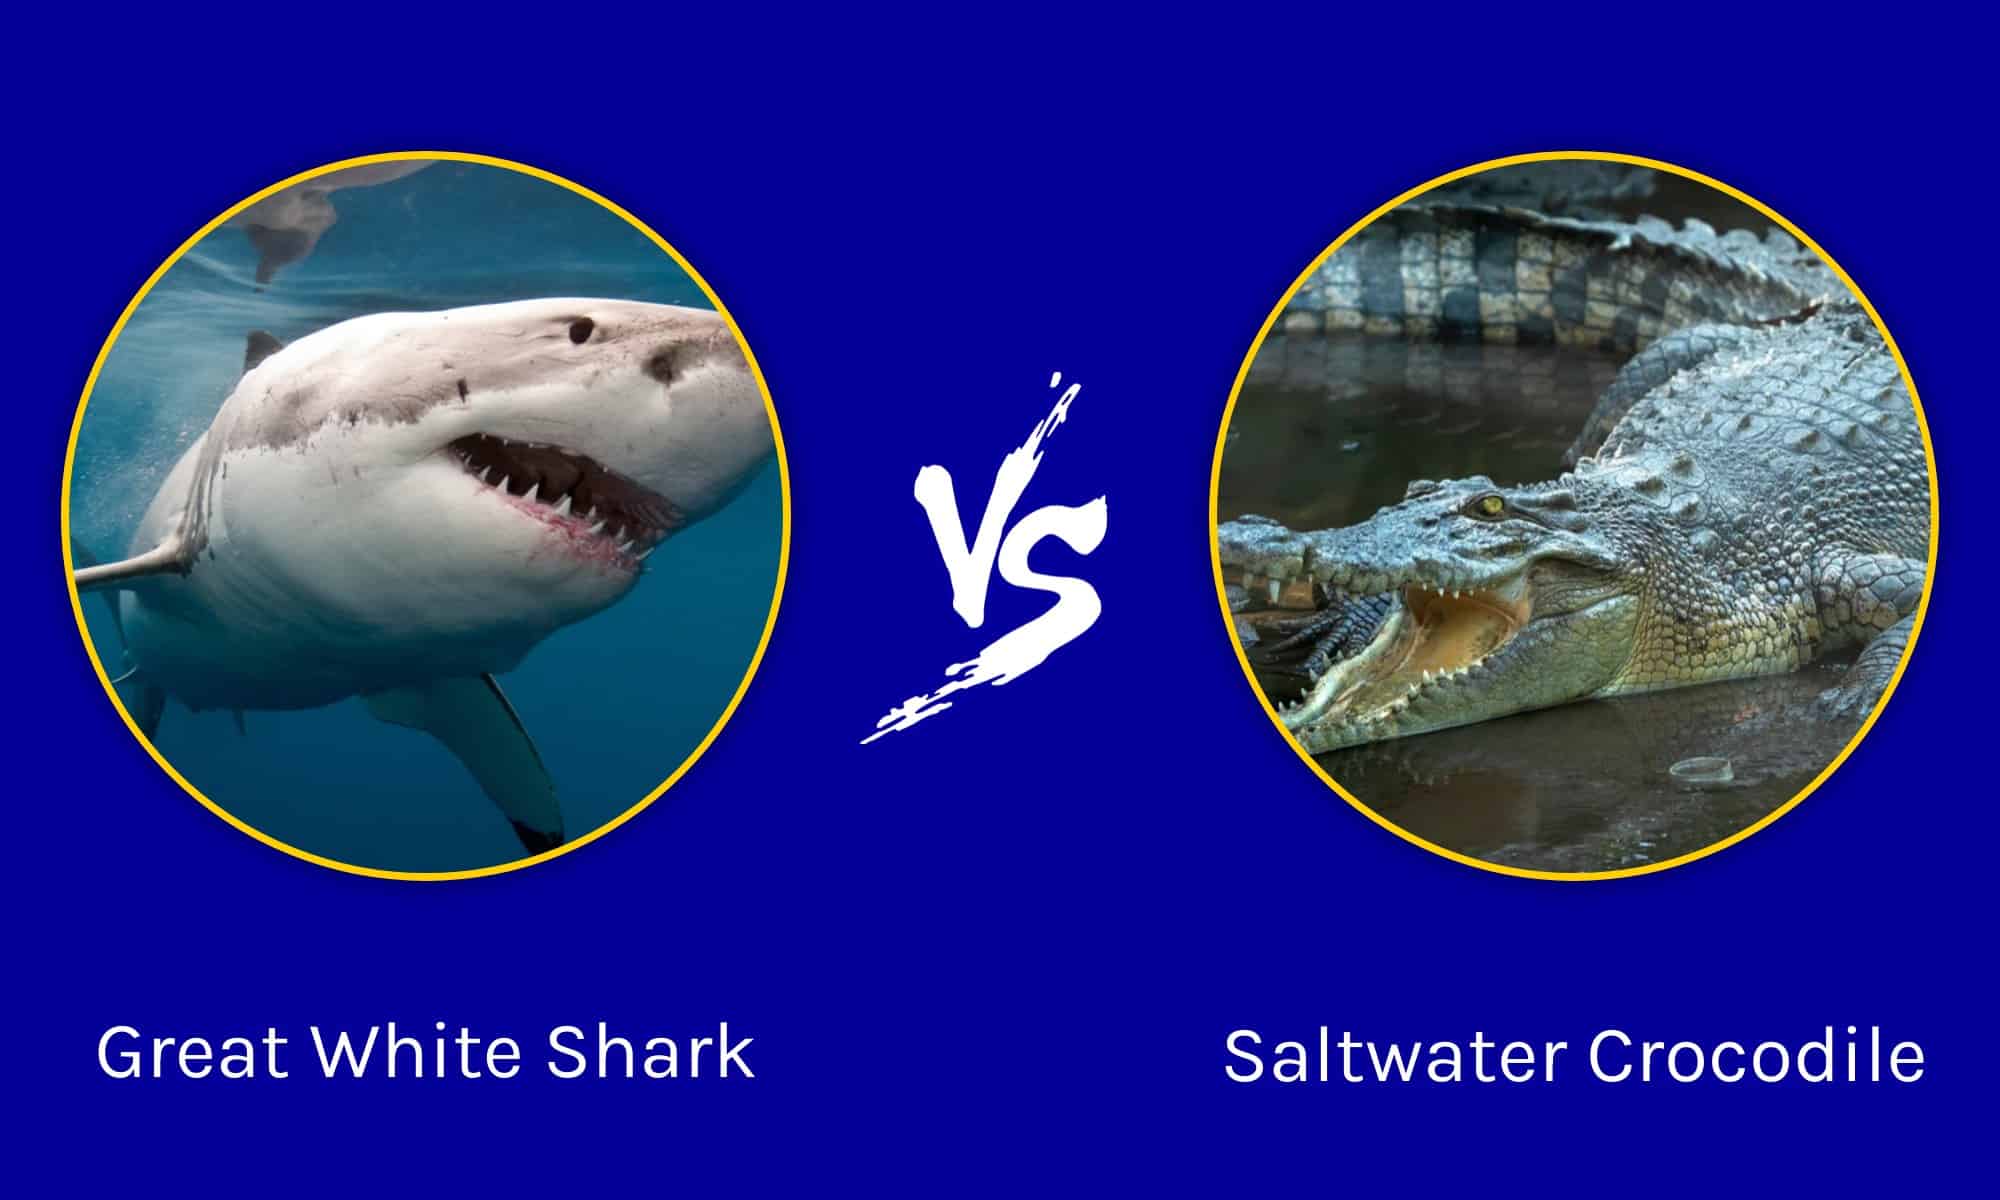 Salt water crocodile vs great white shark